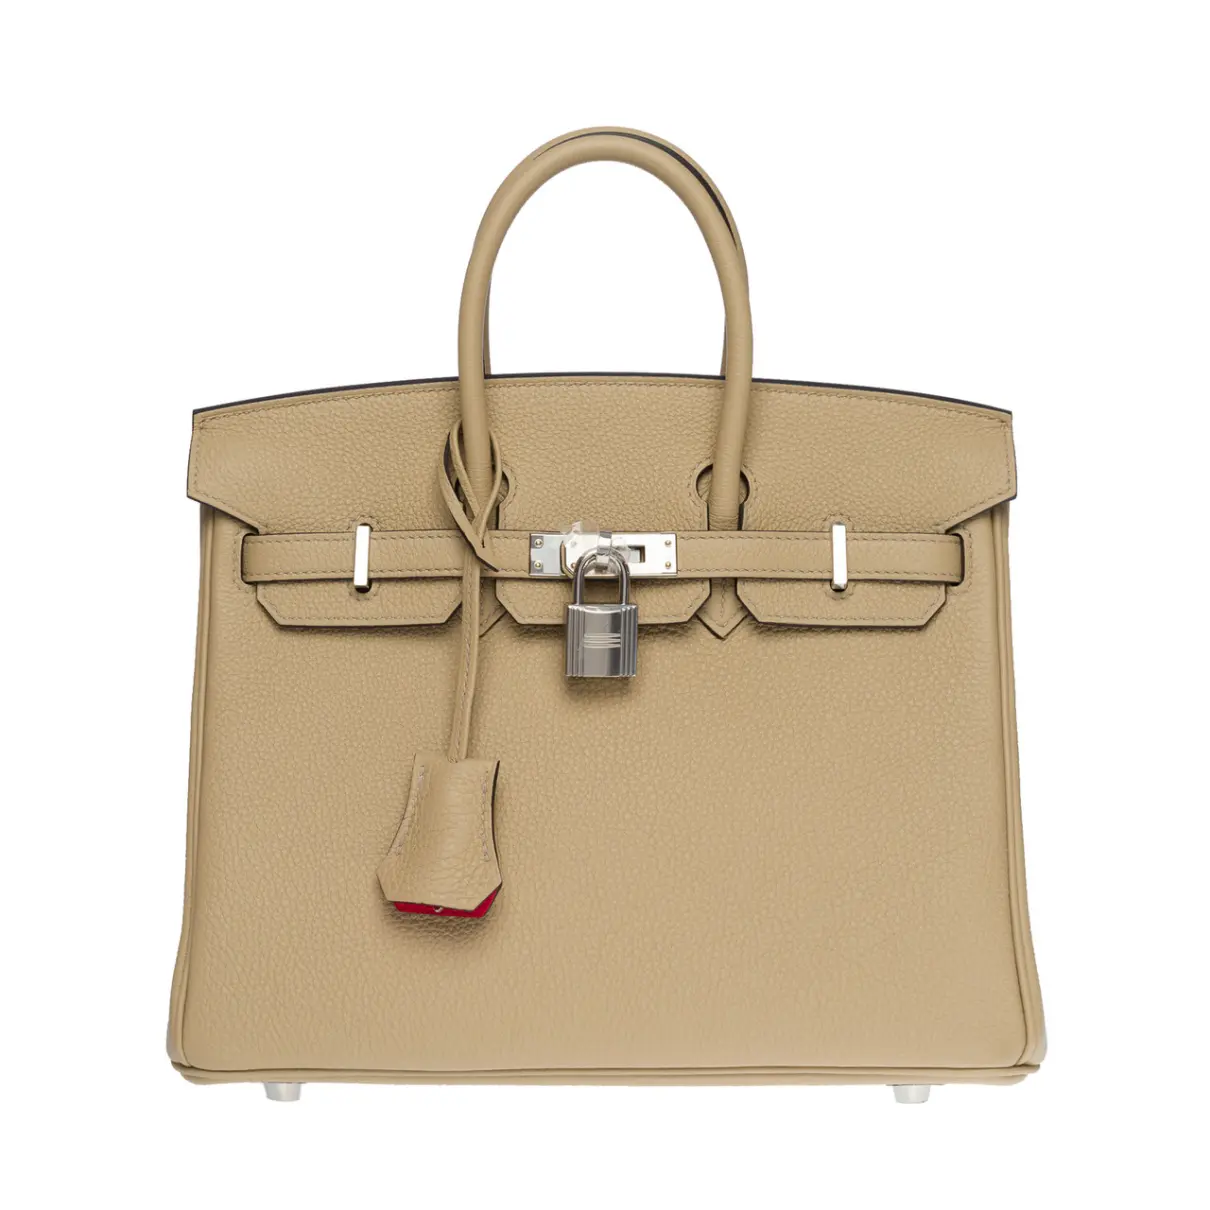 Buy Hermès Birkin 25 leather handbag online